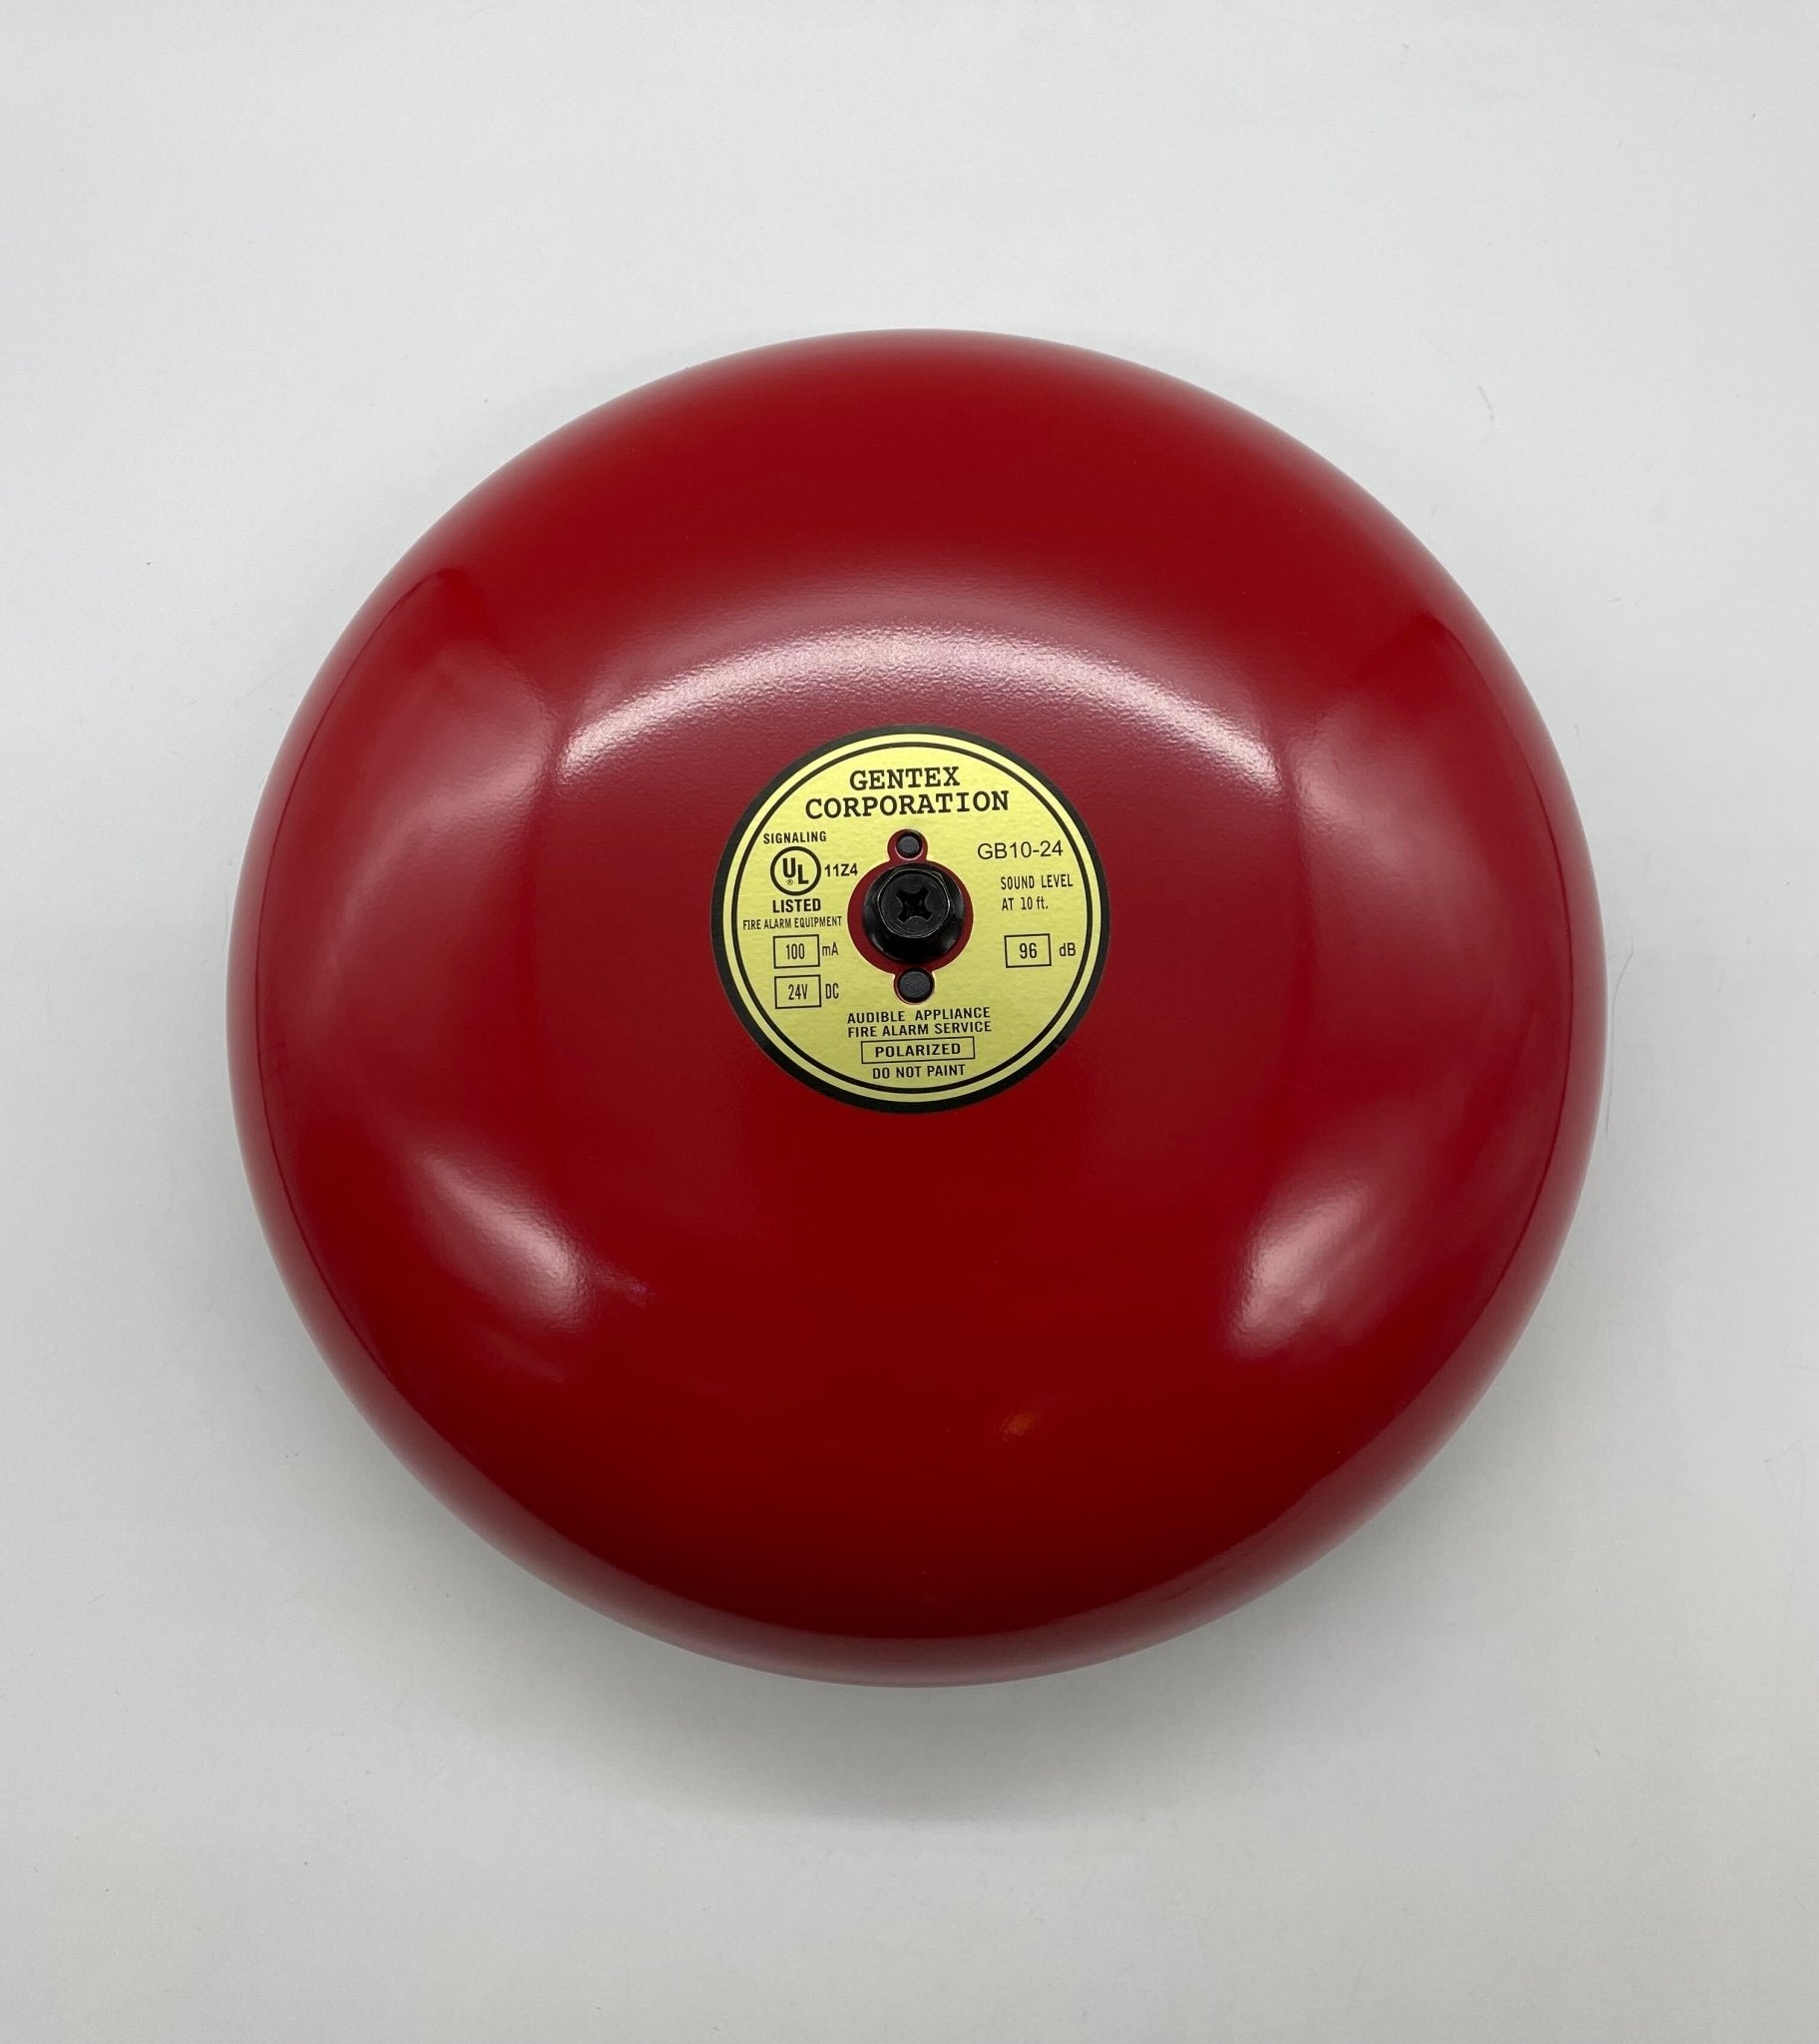 Gentex GB10-24 - The Fire Alarm Supplier